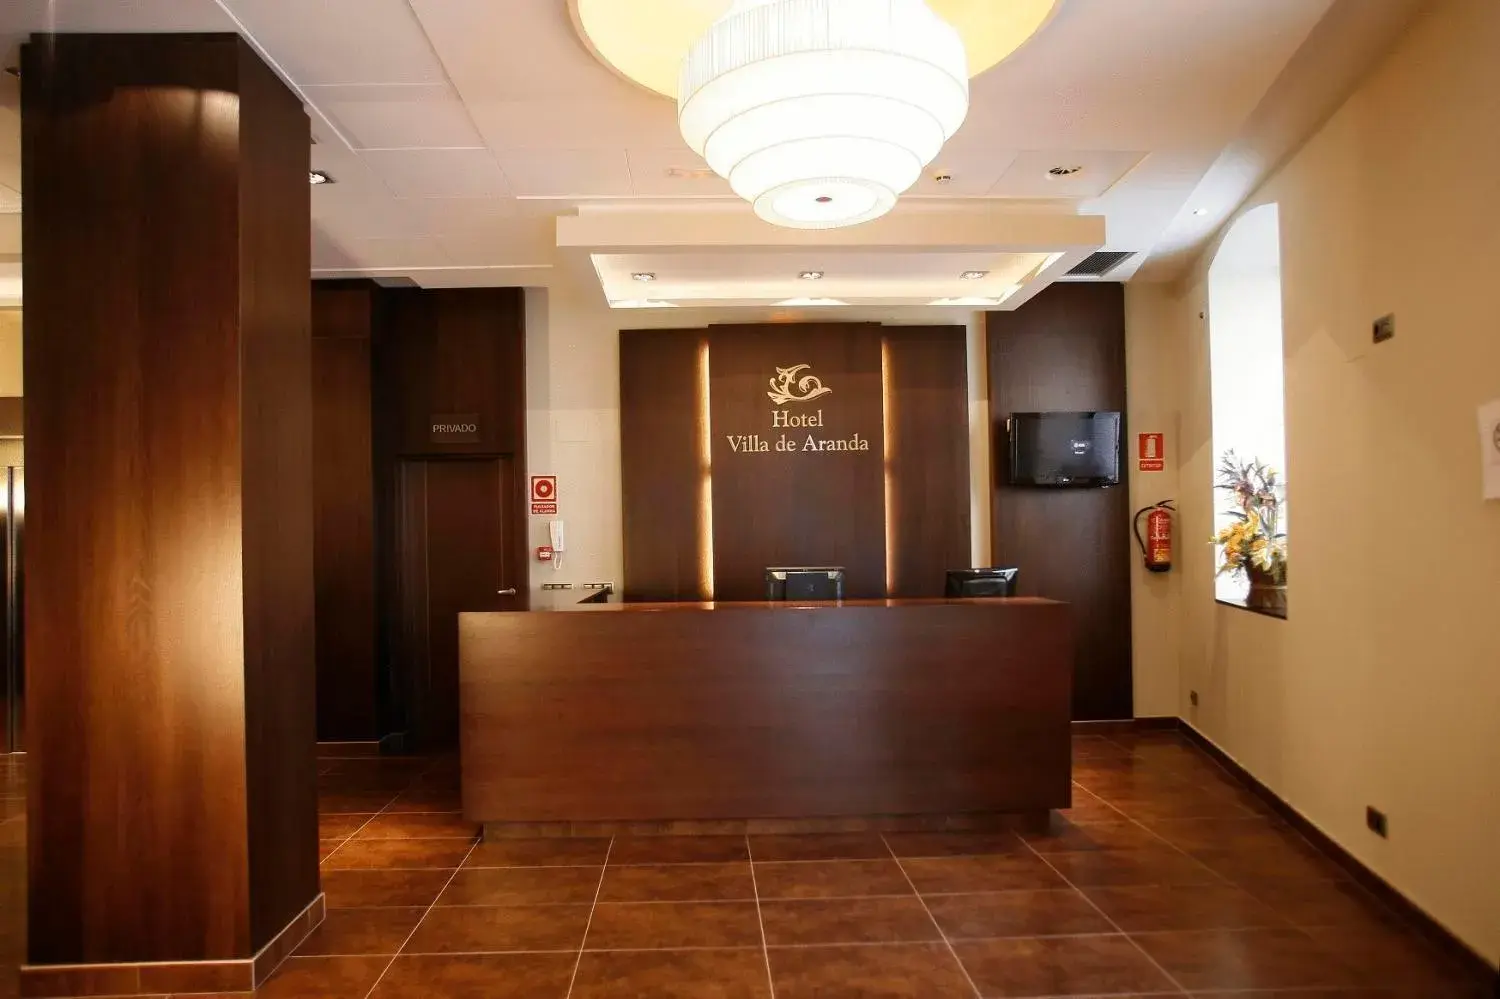 Lobby or reception, Lobby/Reception in Hotel Villa de Aranda